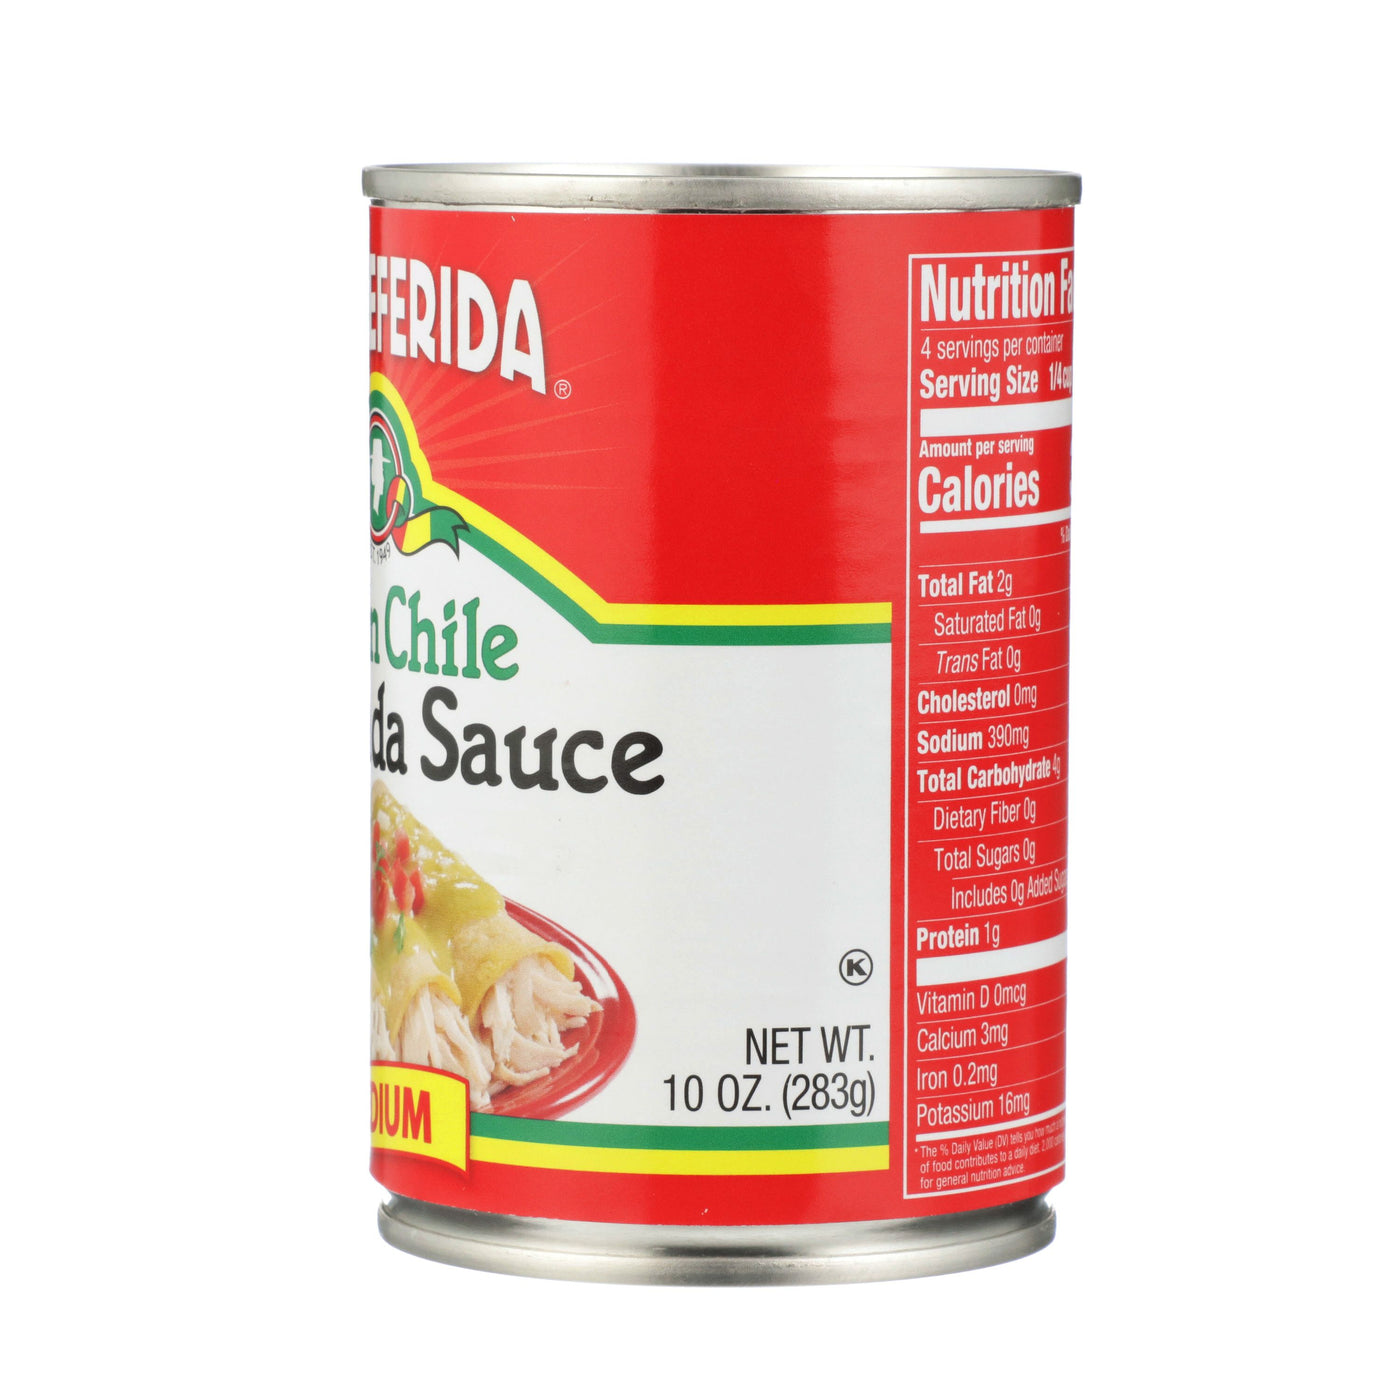 Green Chile Enchilada Sauce